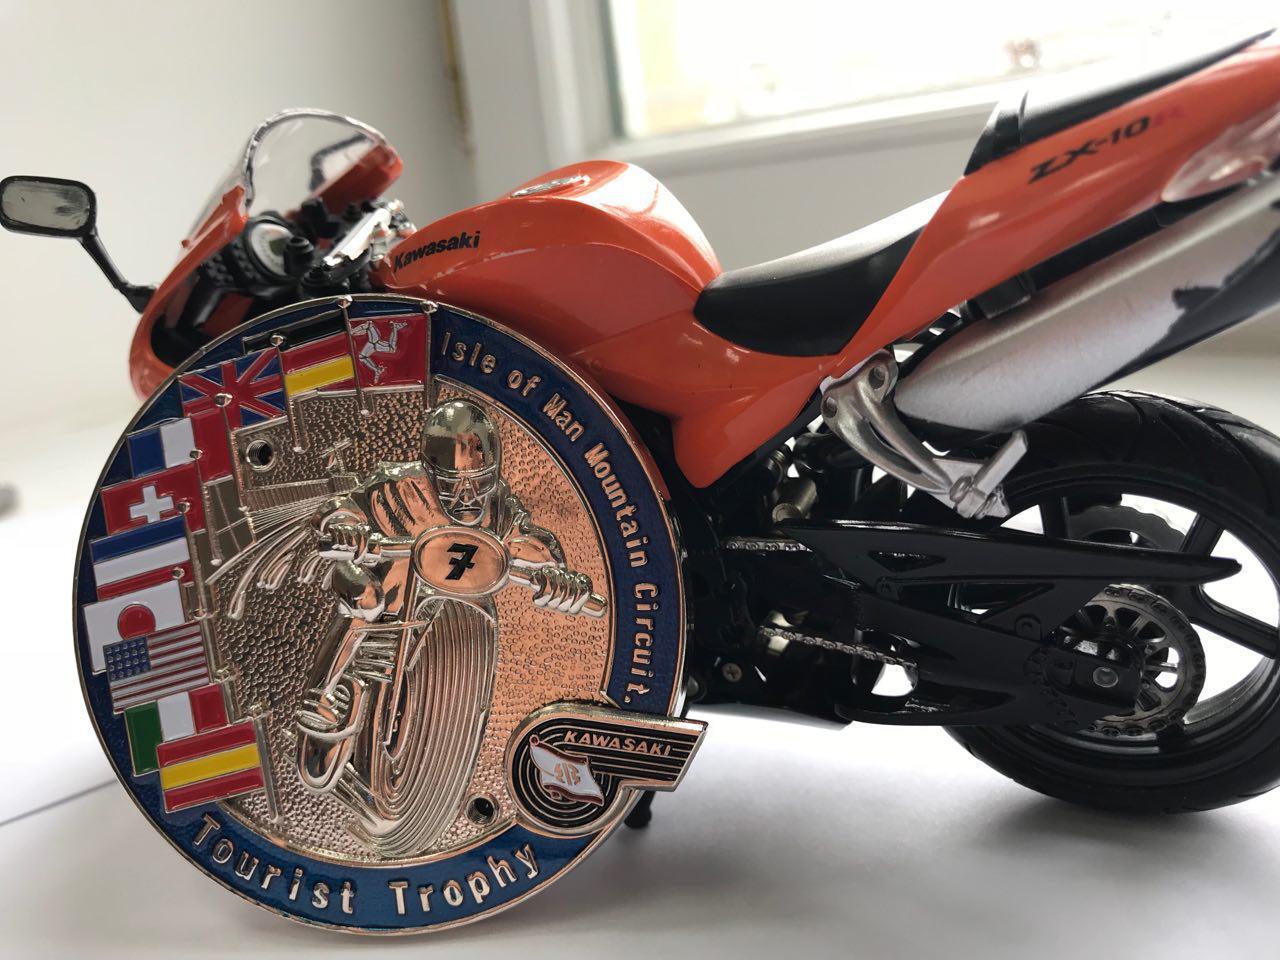 Vintage Kawasaki motorcycle bike badge emblem - Isle of Man Race badge Fits all